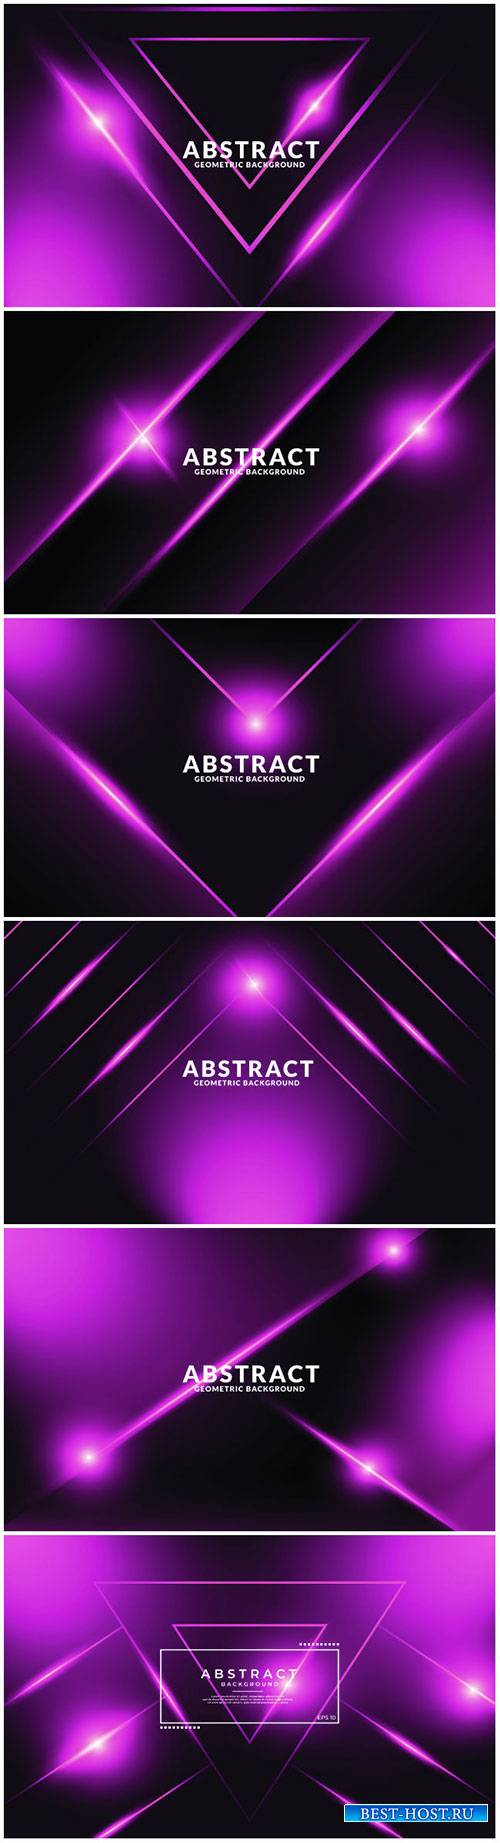 Dark purple realistic abstract geometric background, neon light effect